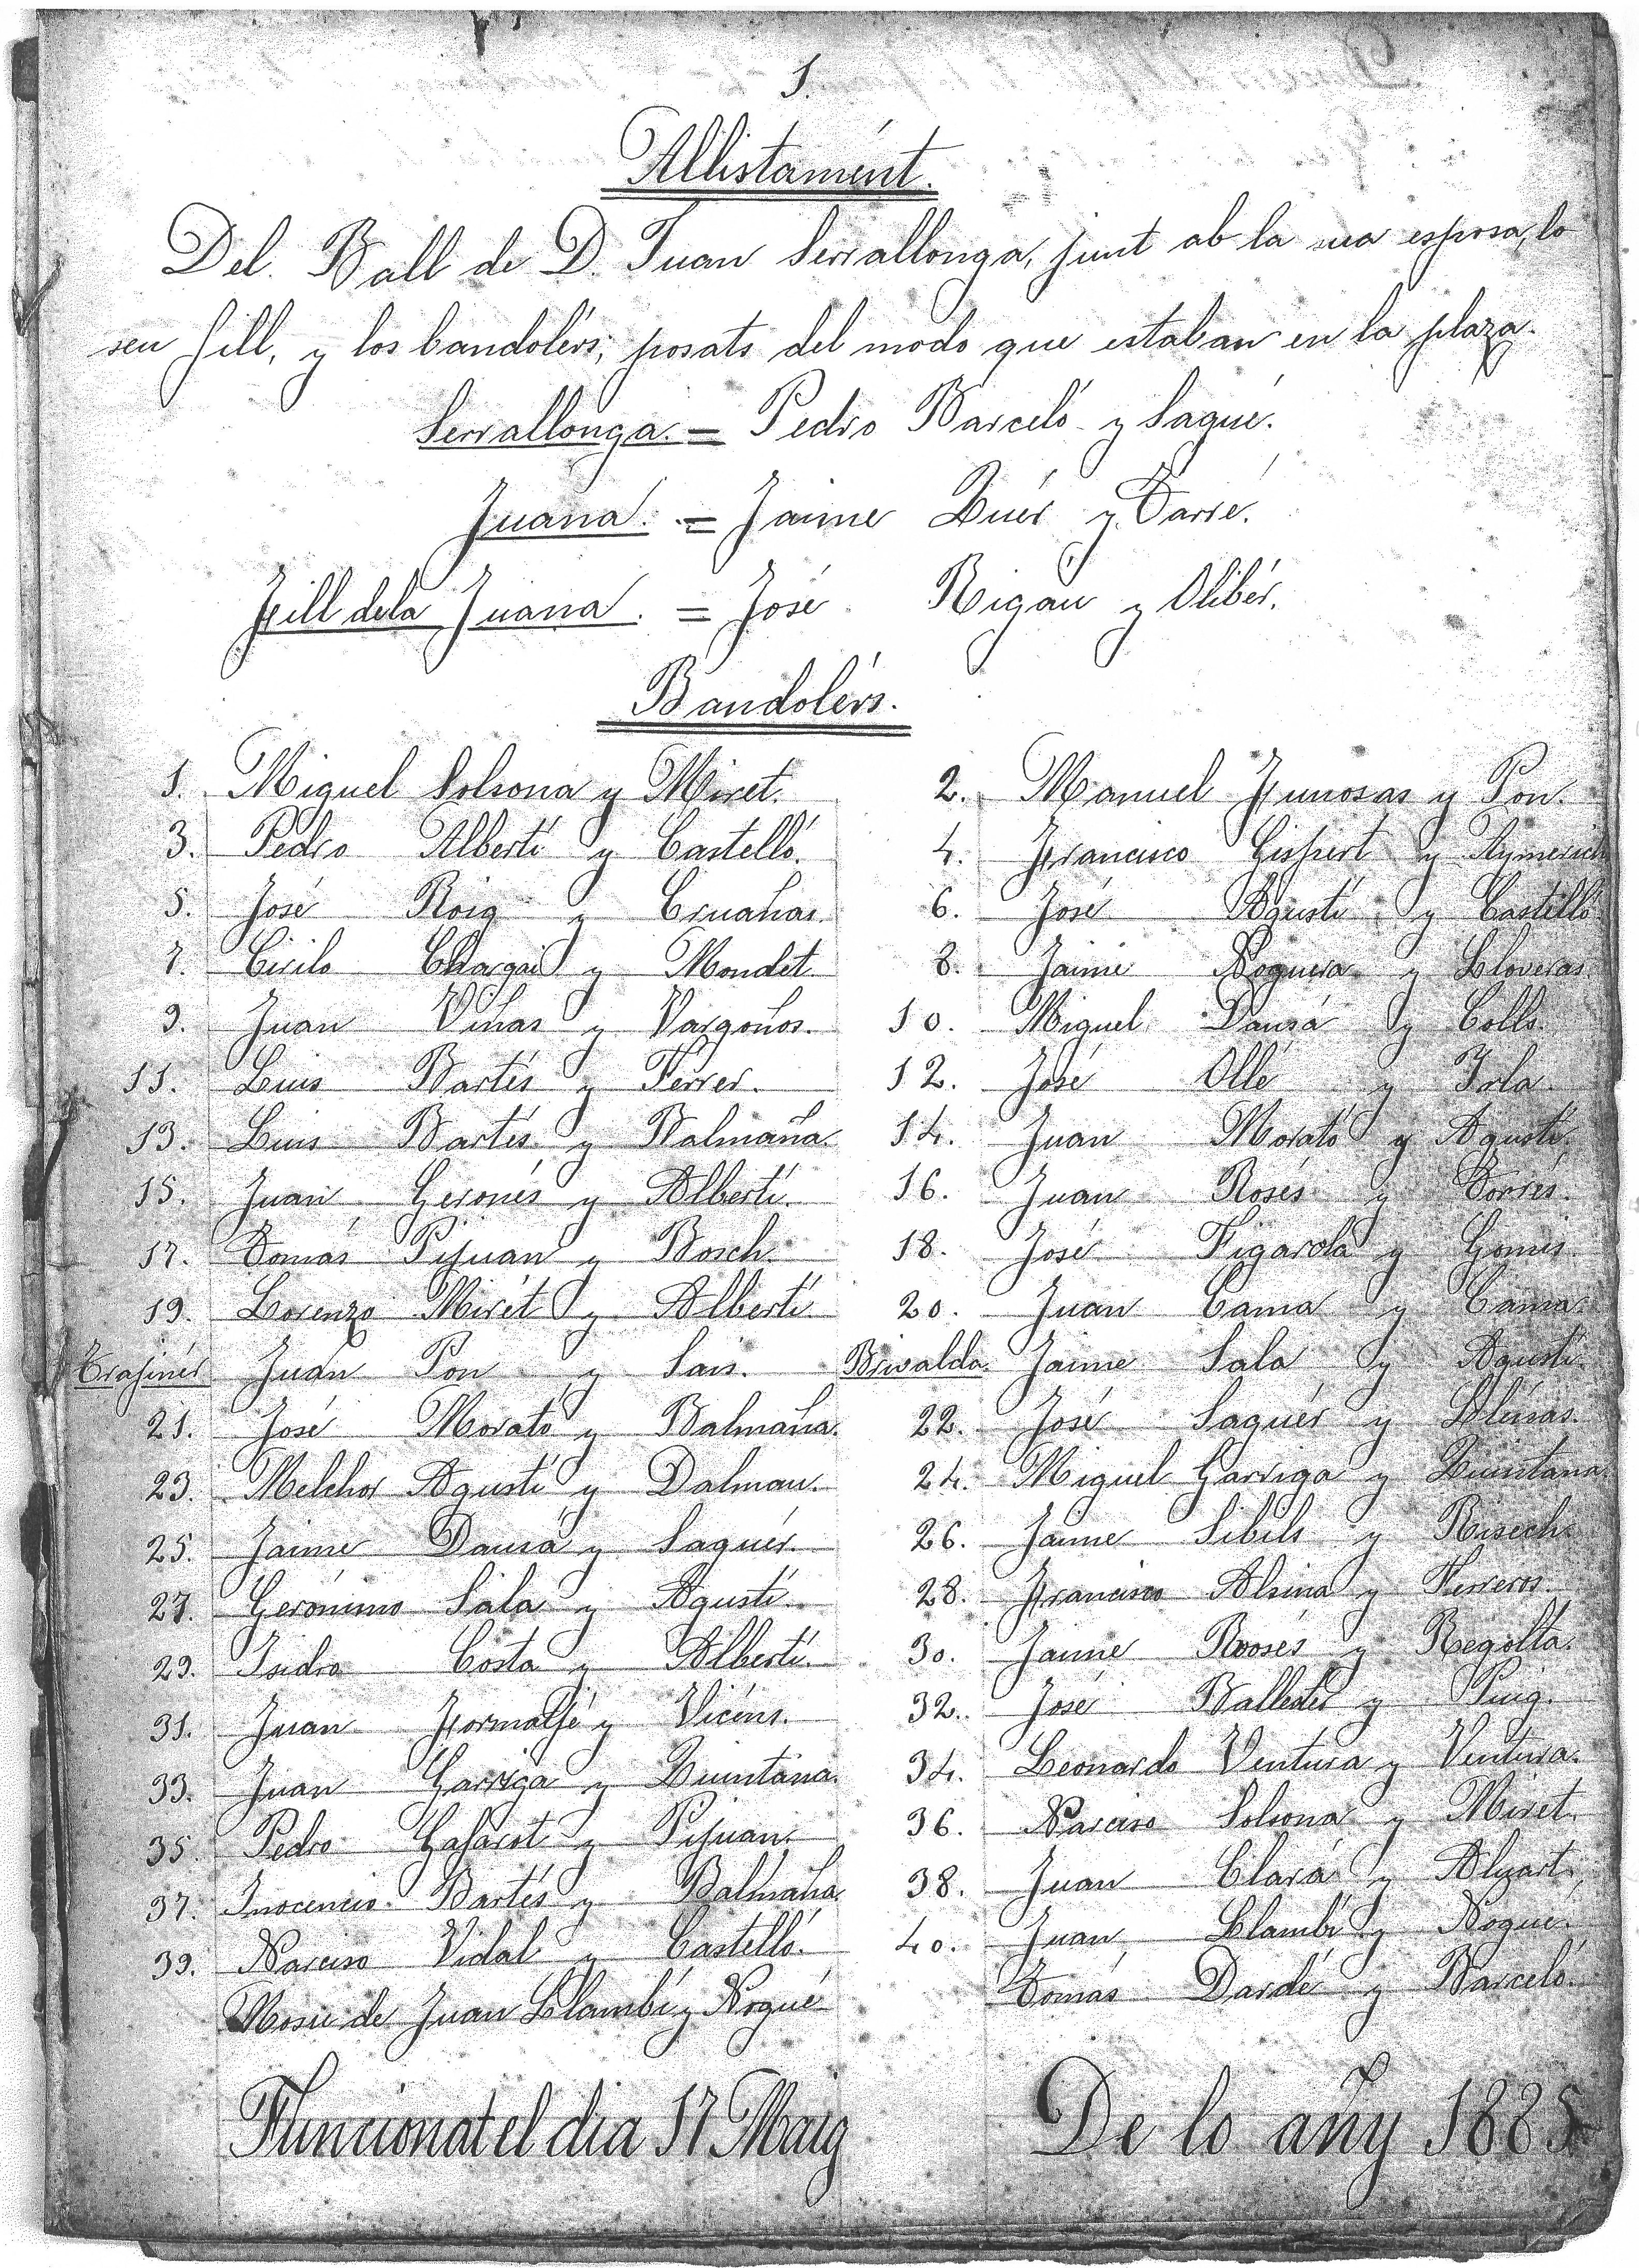 220802 Document del Ball den Serrallonga del 17 5 1885 1